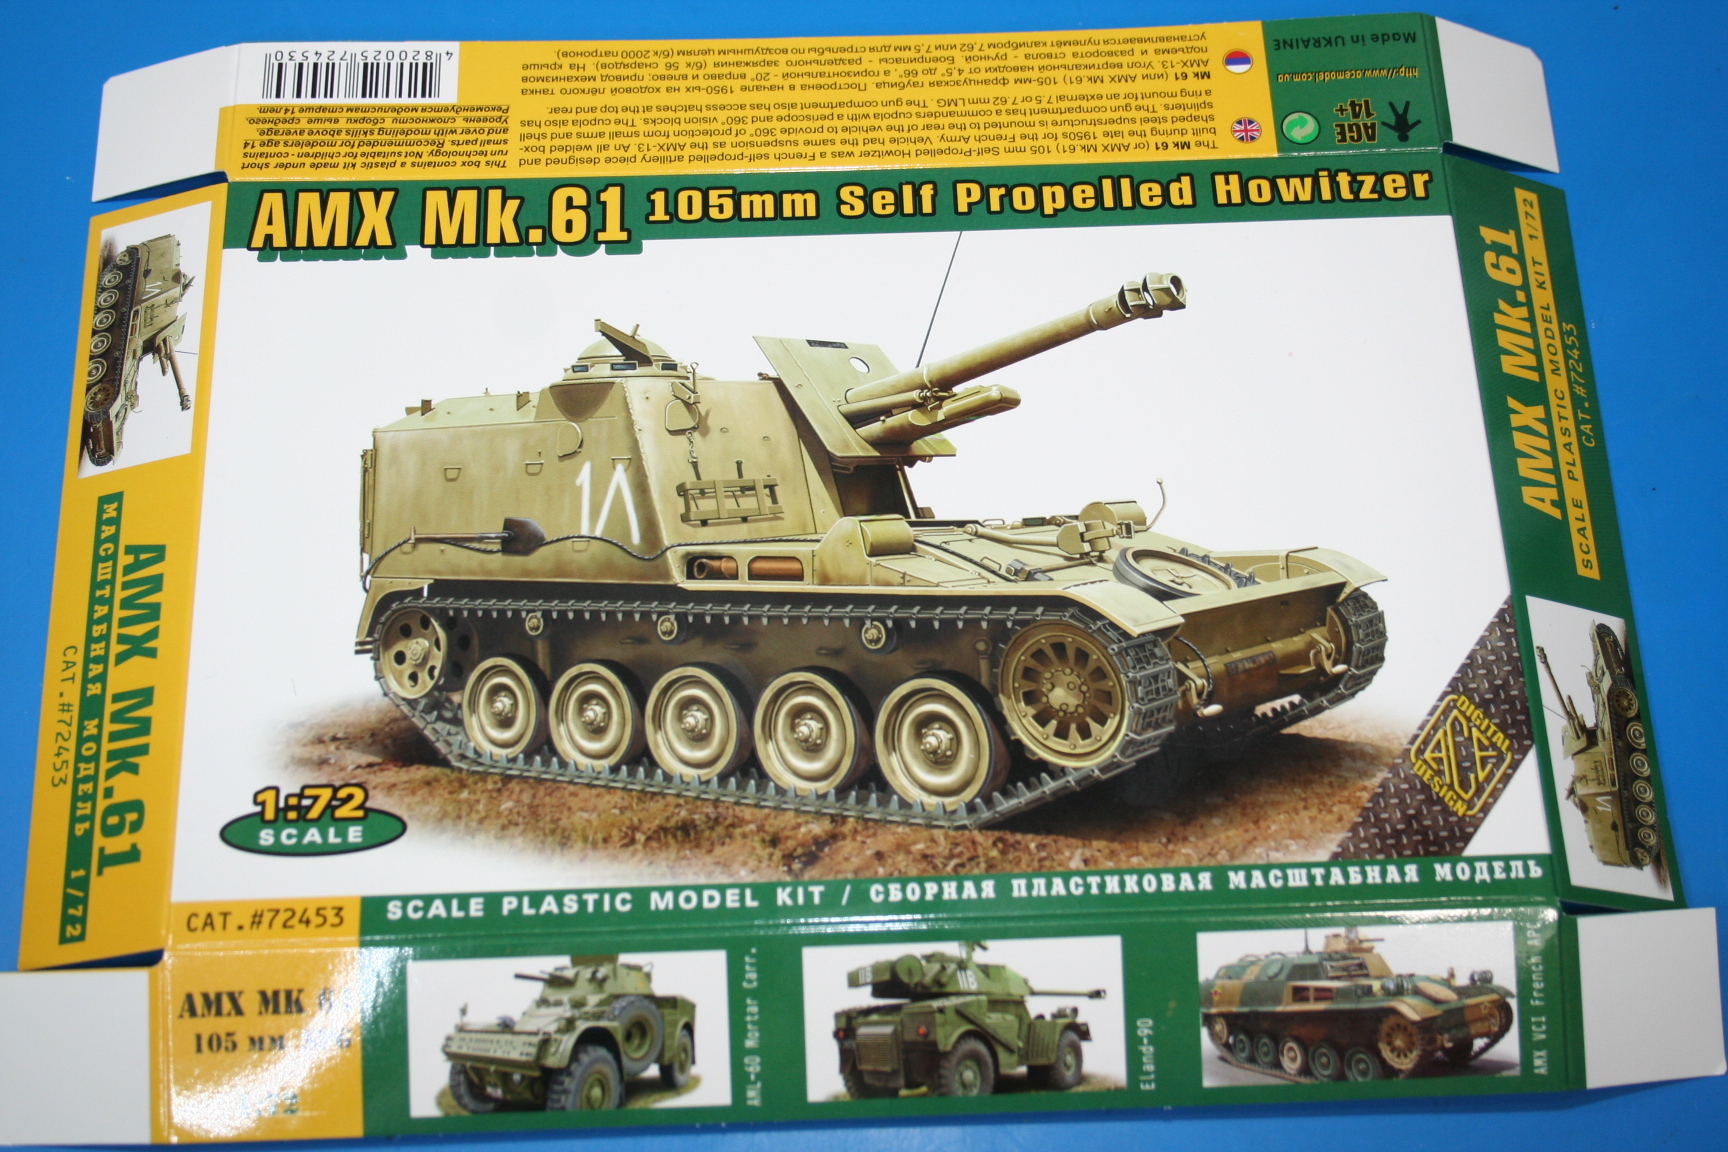 AMX Mk.61 105 mm